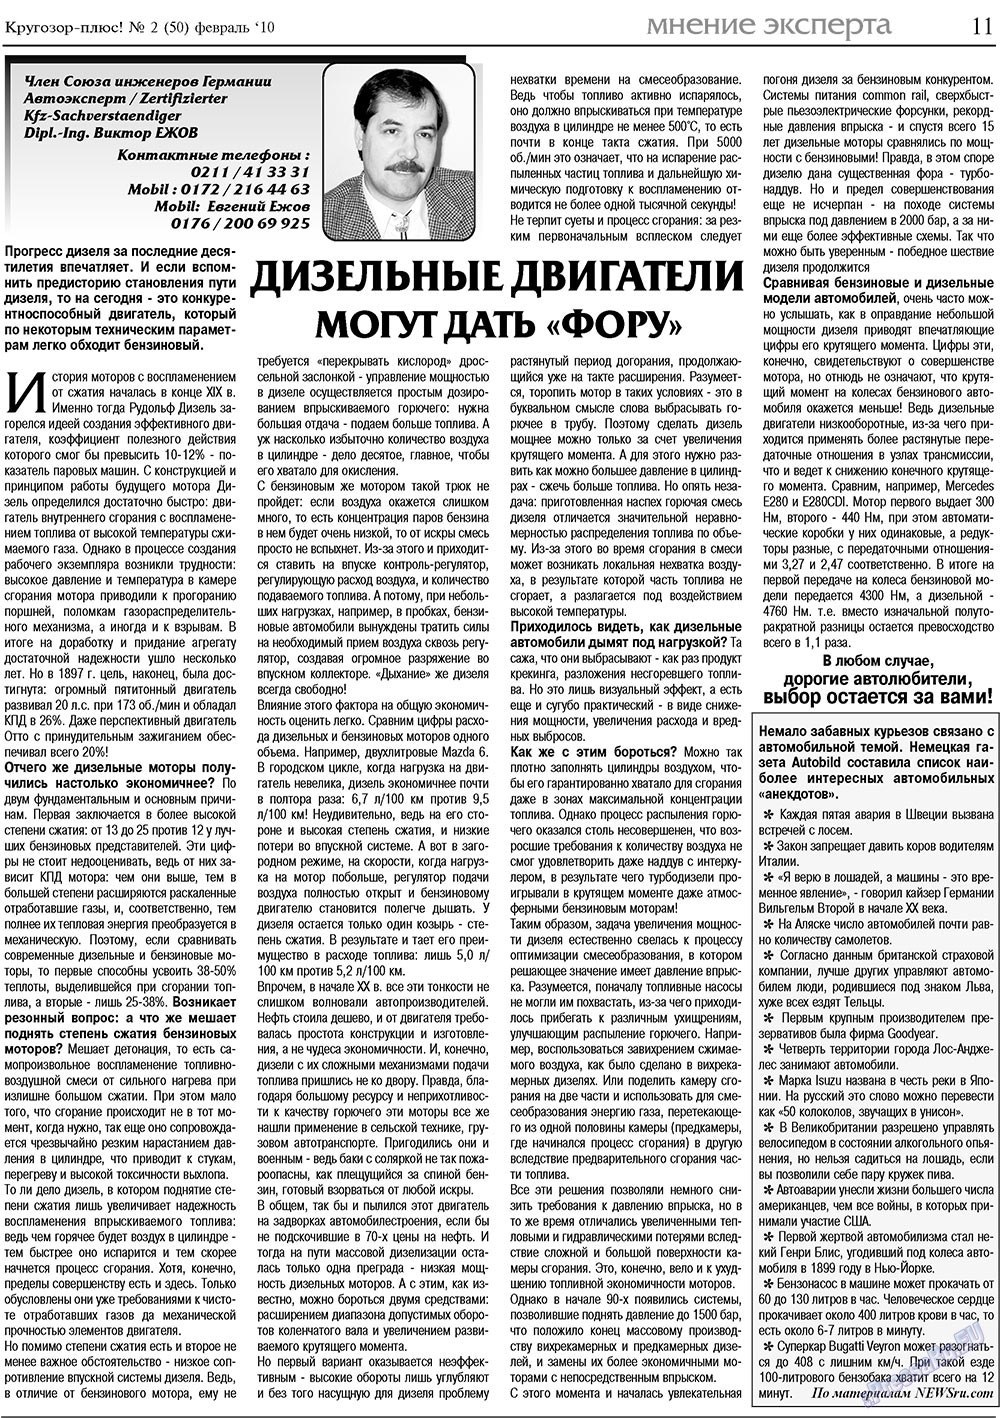 Кругозор плюс! (газета). 2010 год, номер 2, стр. 11